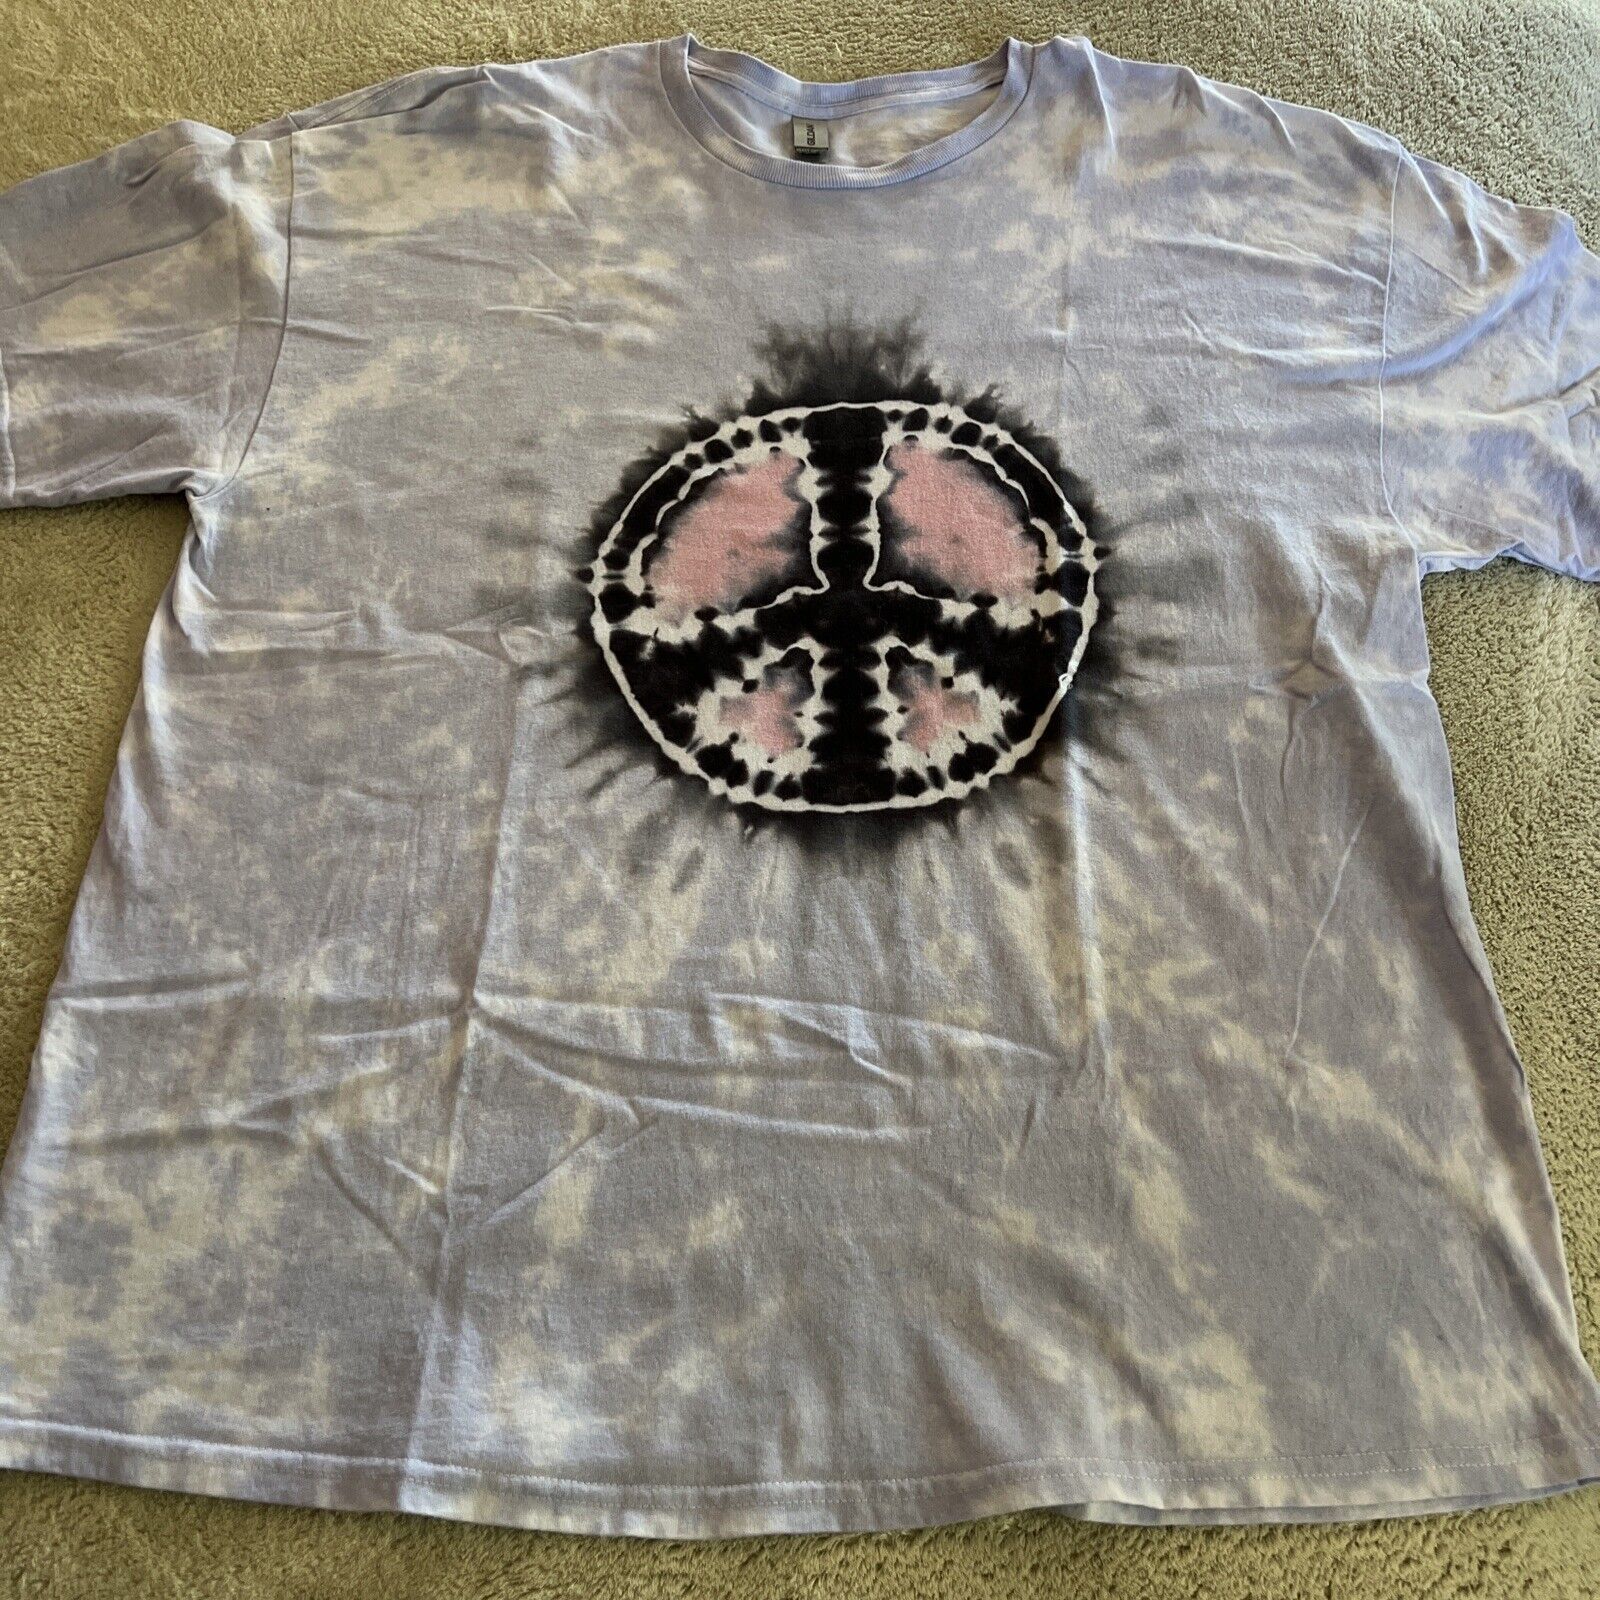 Primary image for Gildan Mens Purple White Black Pink Peace Sign Tie Dye Short Sleeve Shirt 2XL